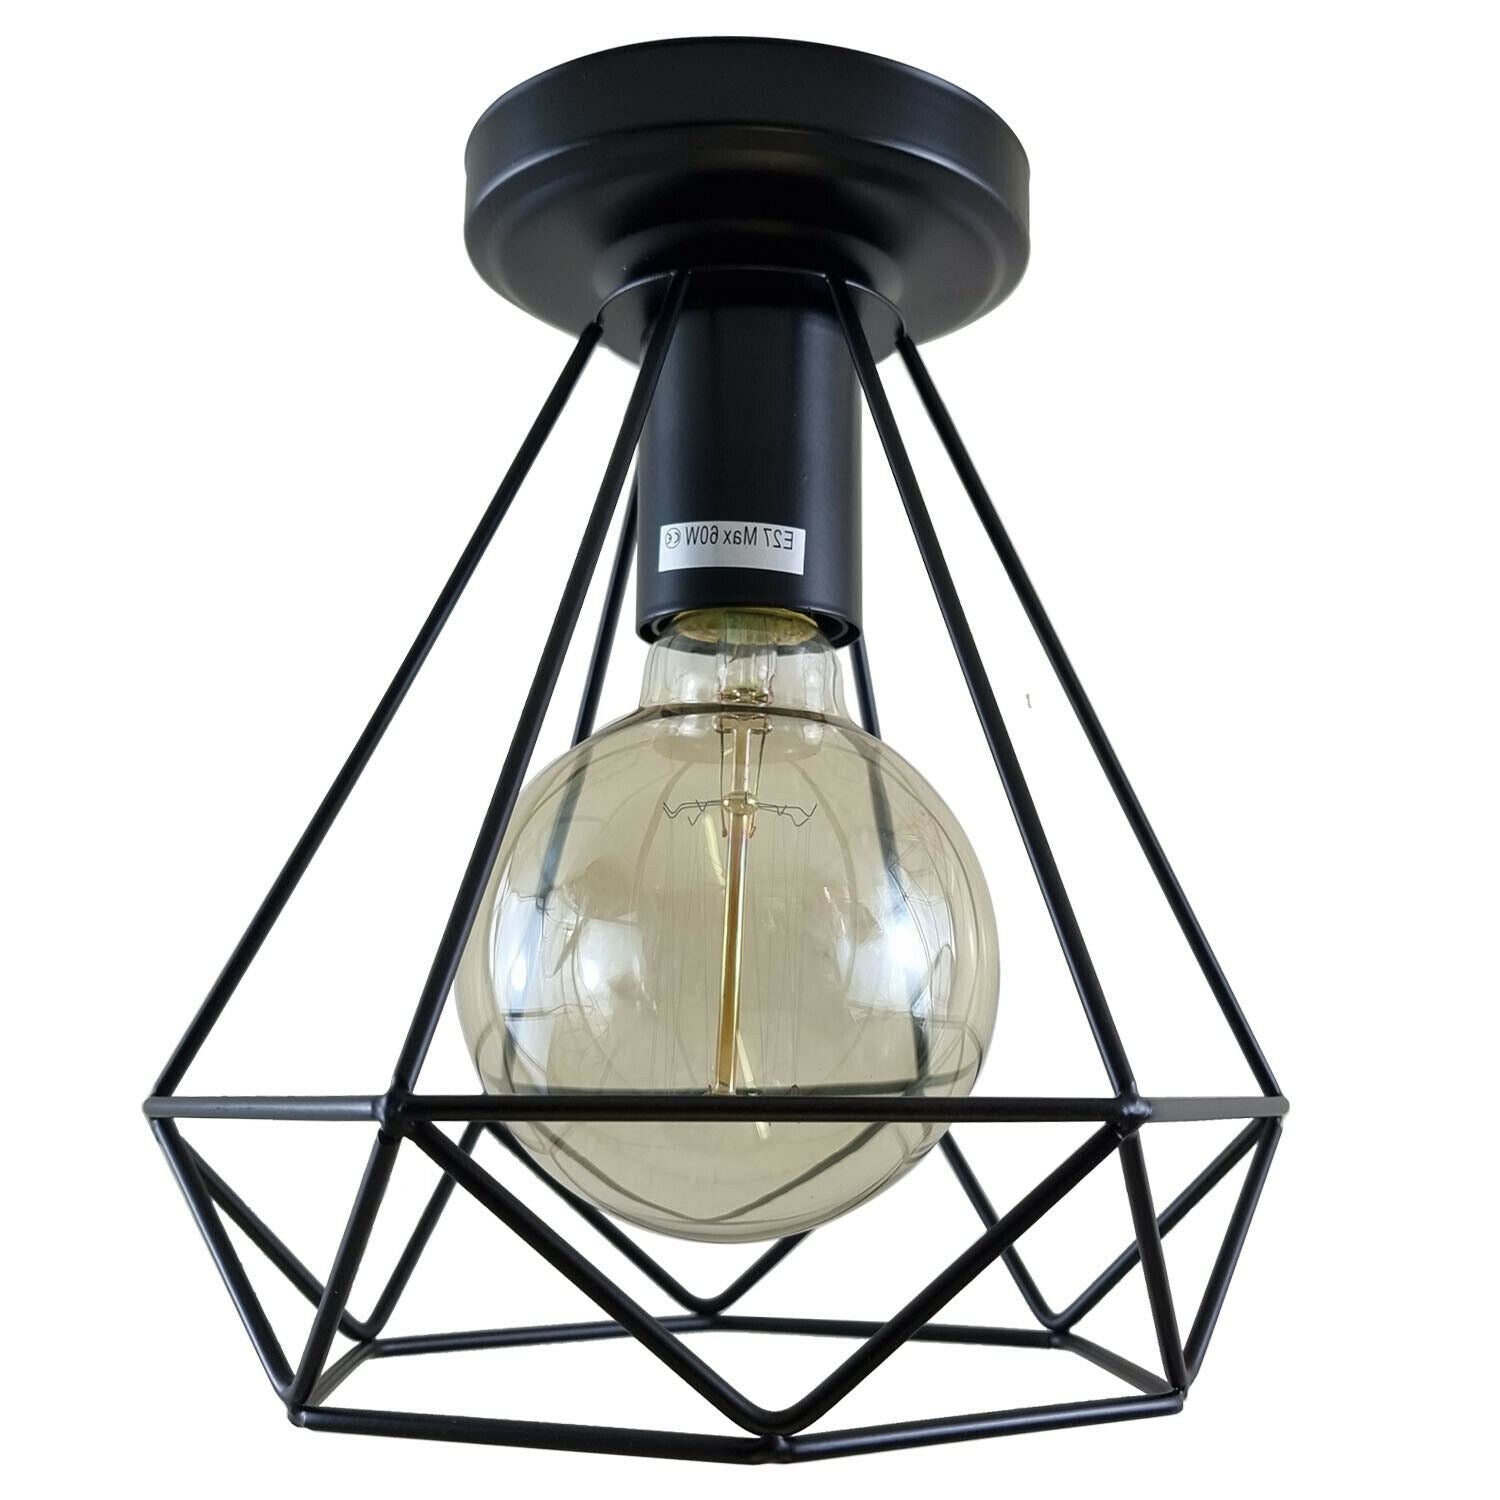 Industrial Retro Vintage Flush Mount Ceiling Light Lamp Fittings for Kitchen Island Home Decor